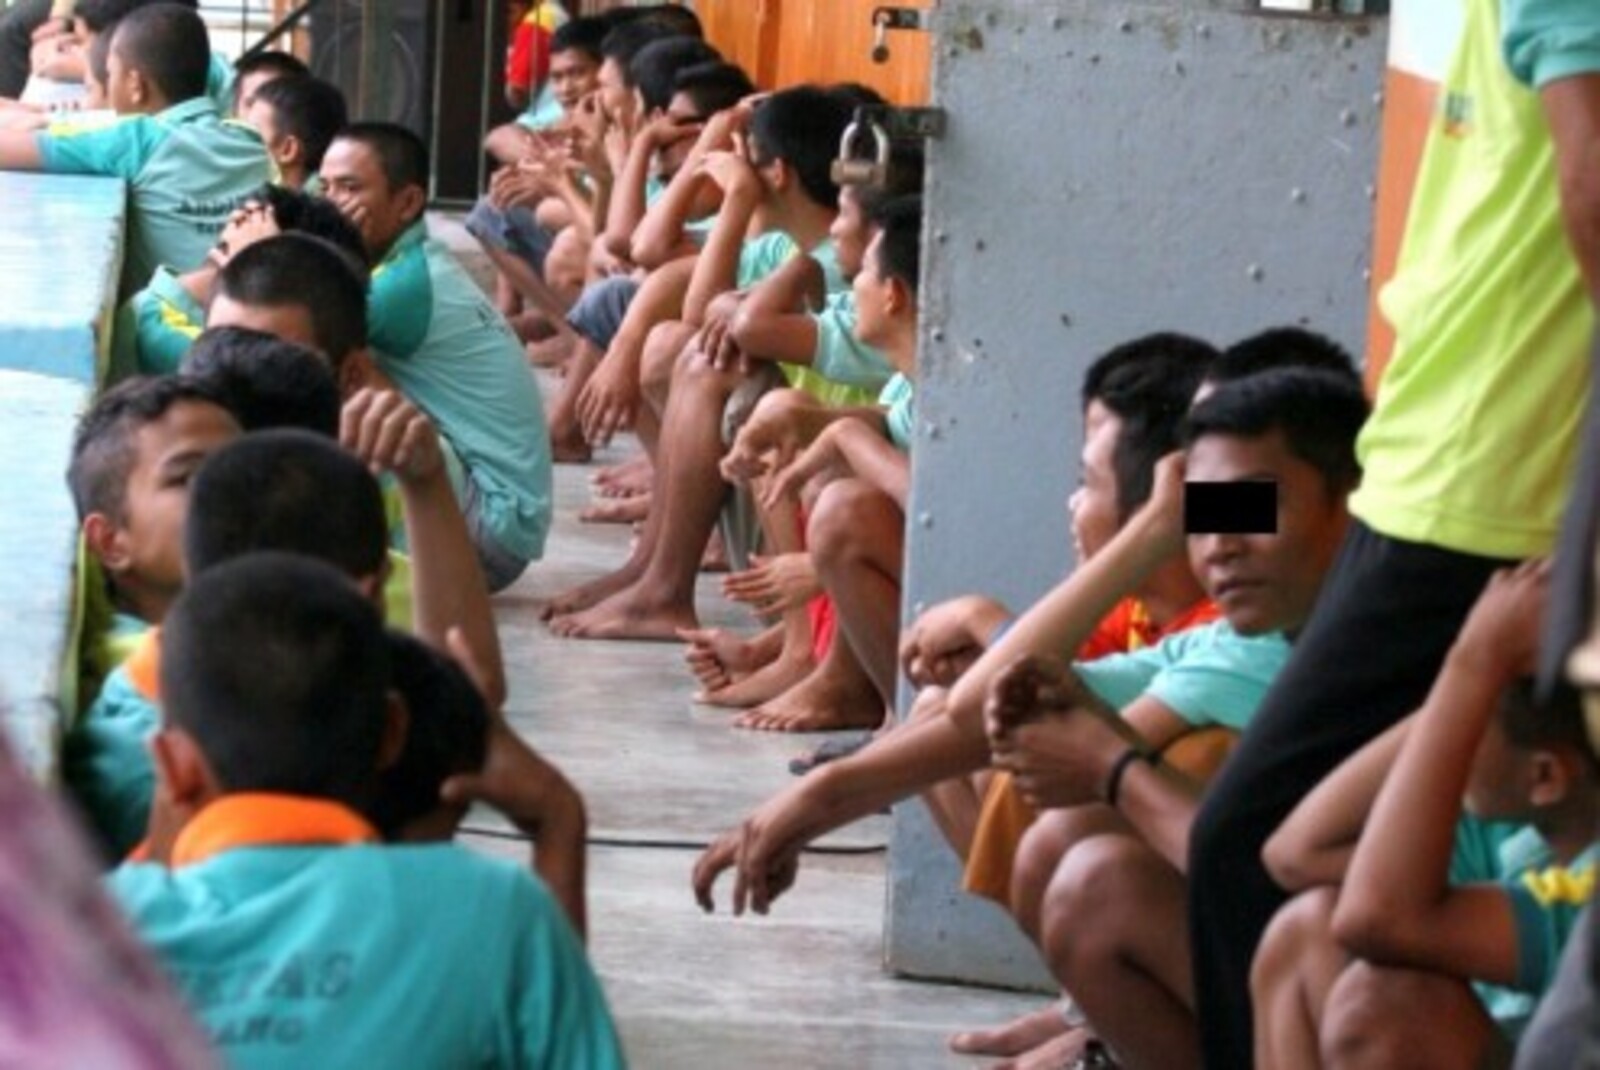 Juveniles in Indonesian prison